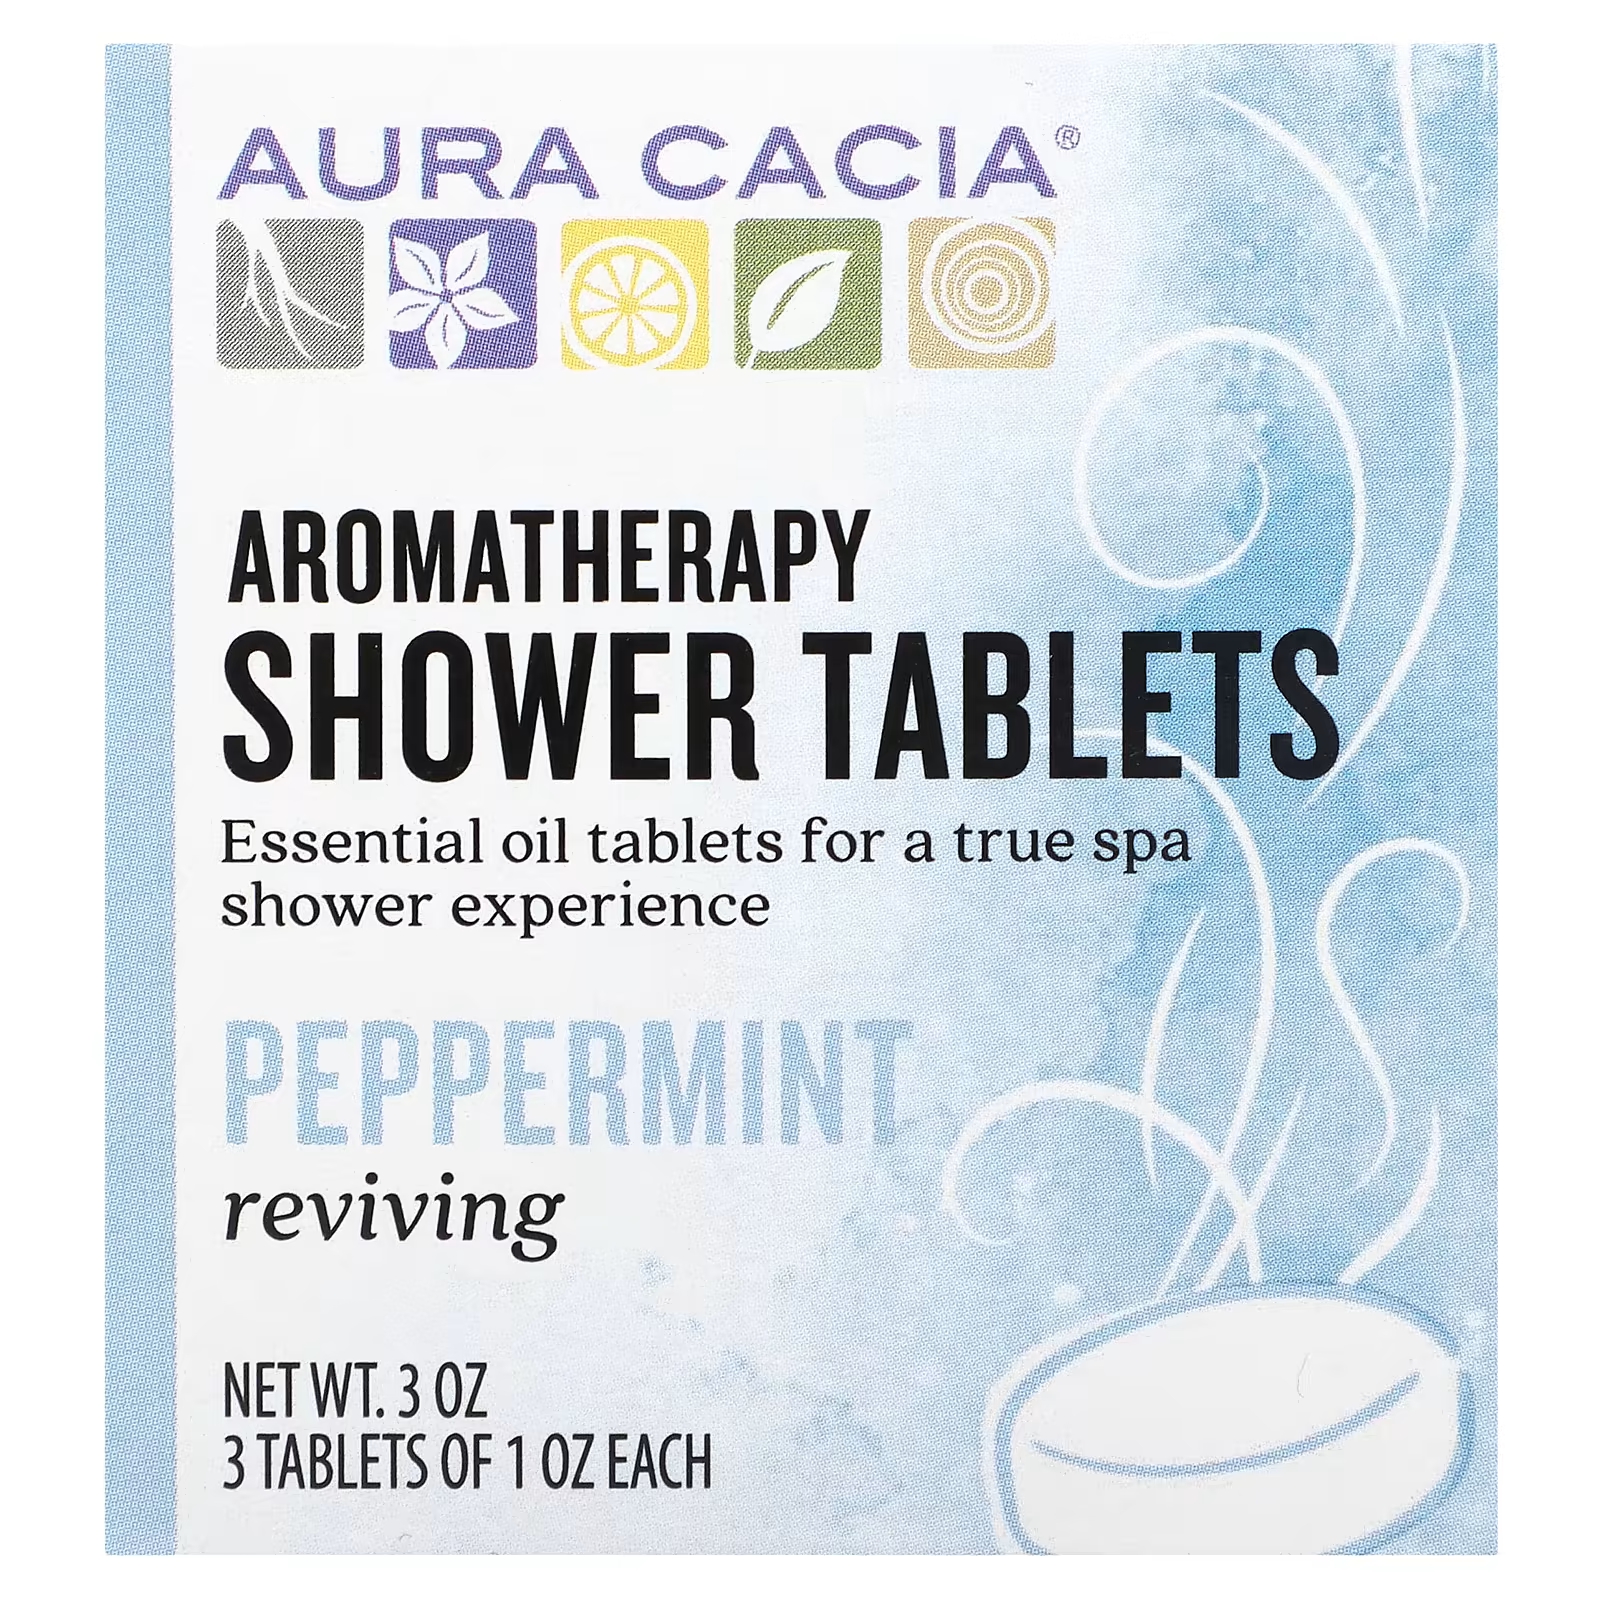 Таблетки для душа Aura Cacia с ароматерапией, 3 таблетки